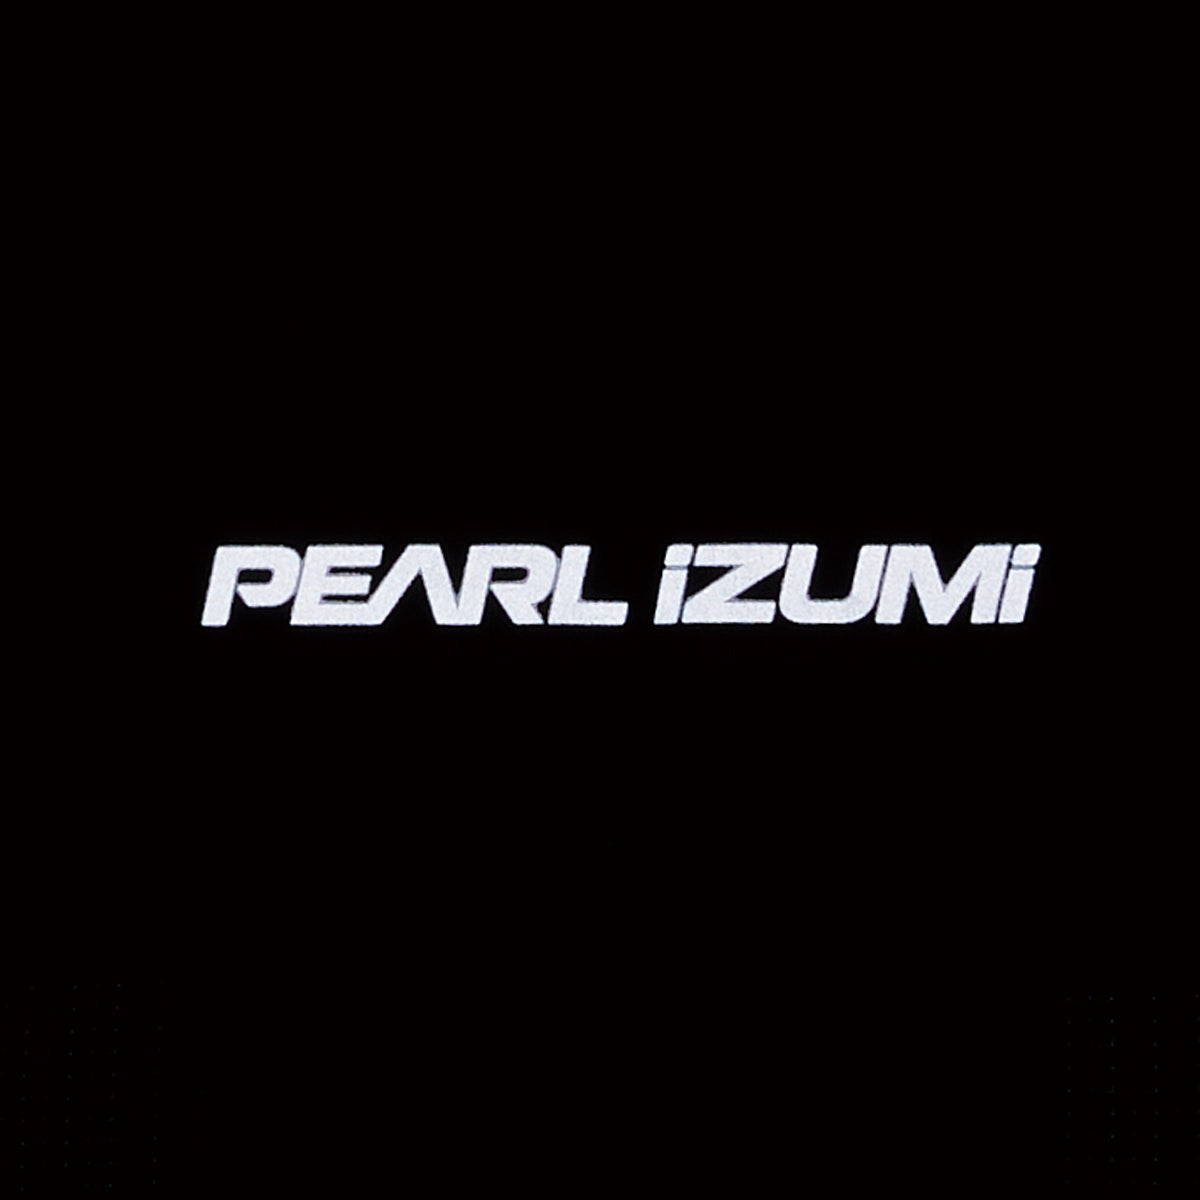 Pearl Izumi Men's First Jersey - Graphite (600-B-2)